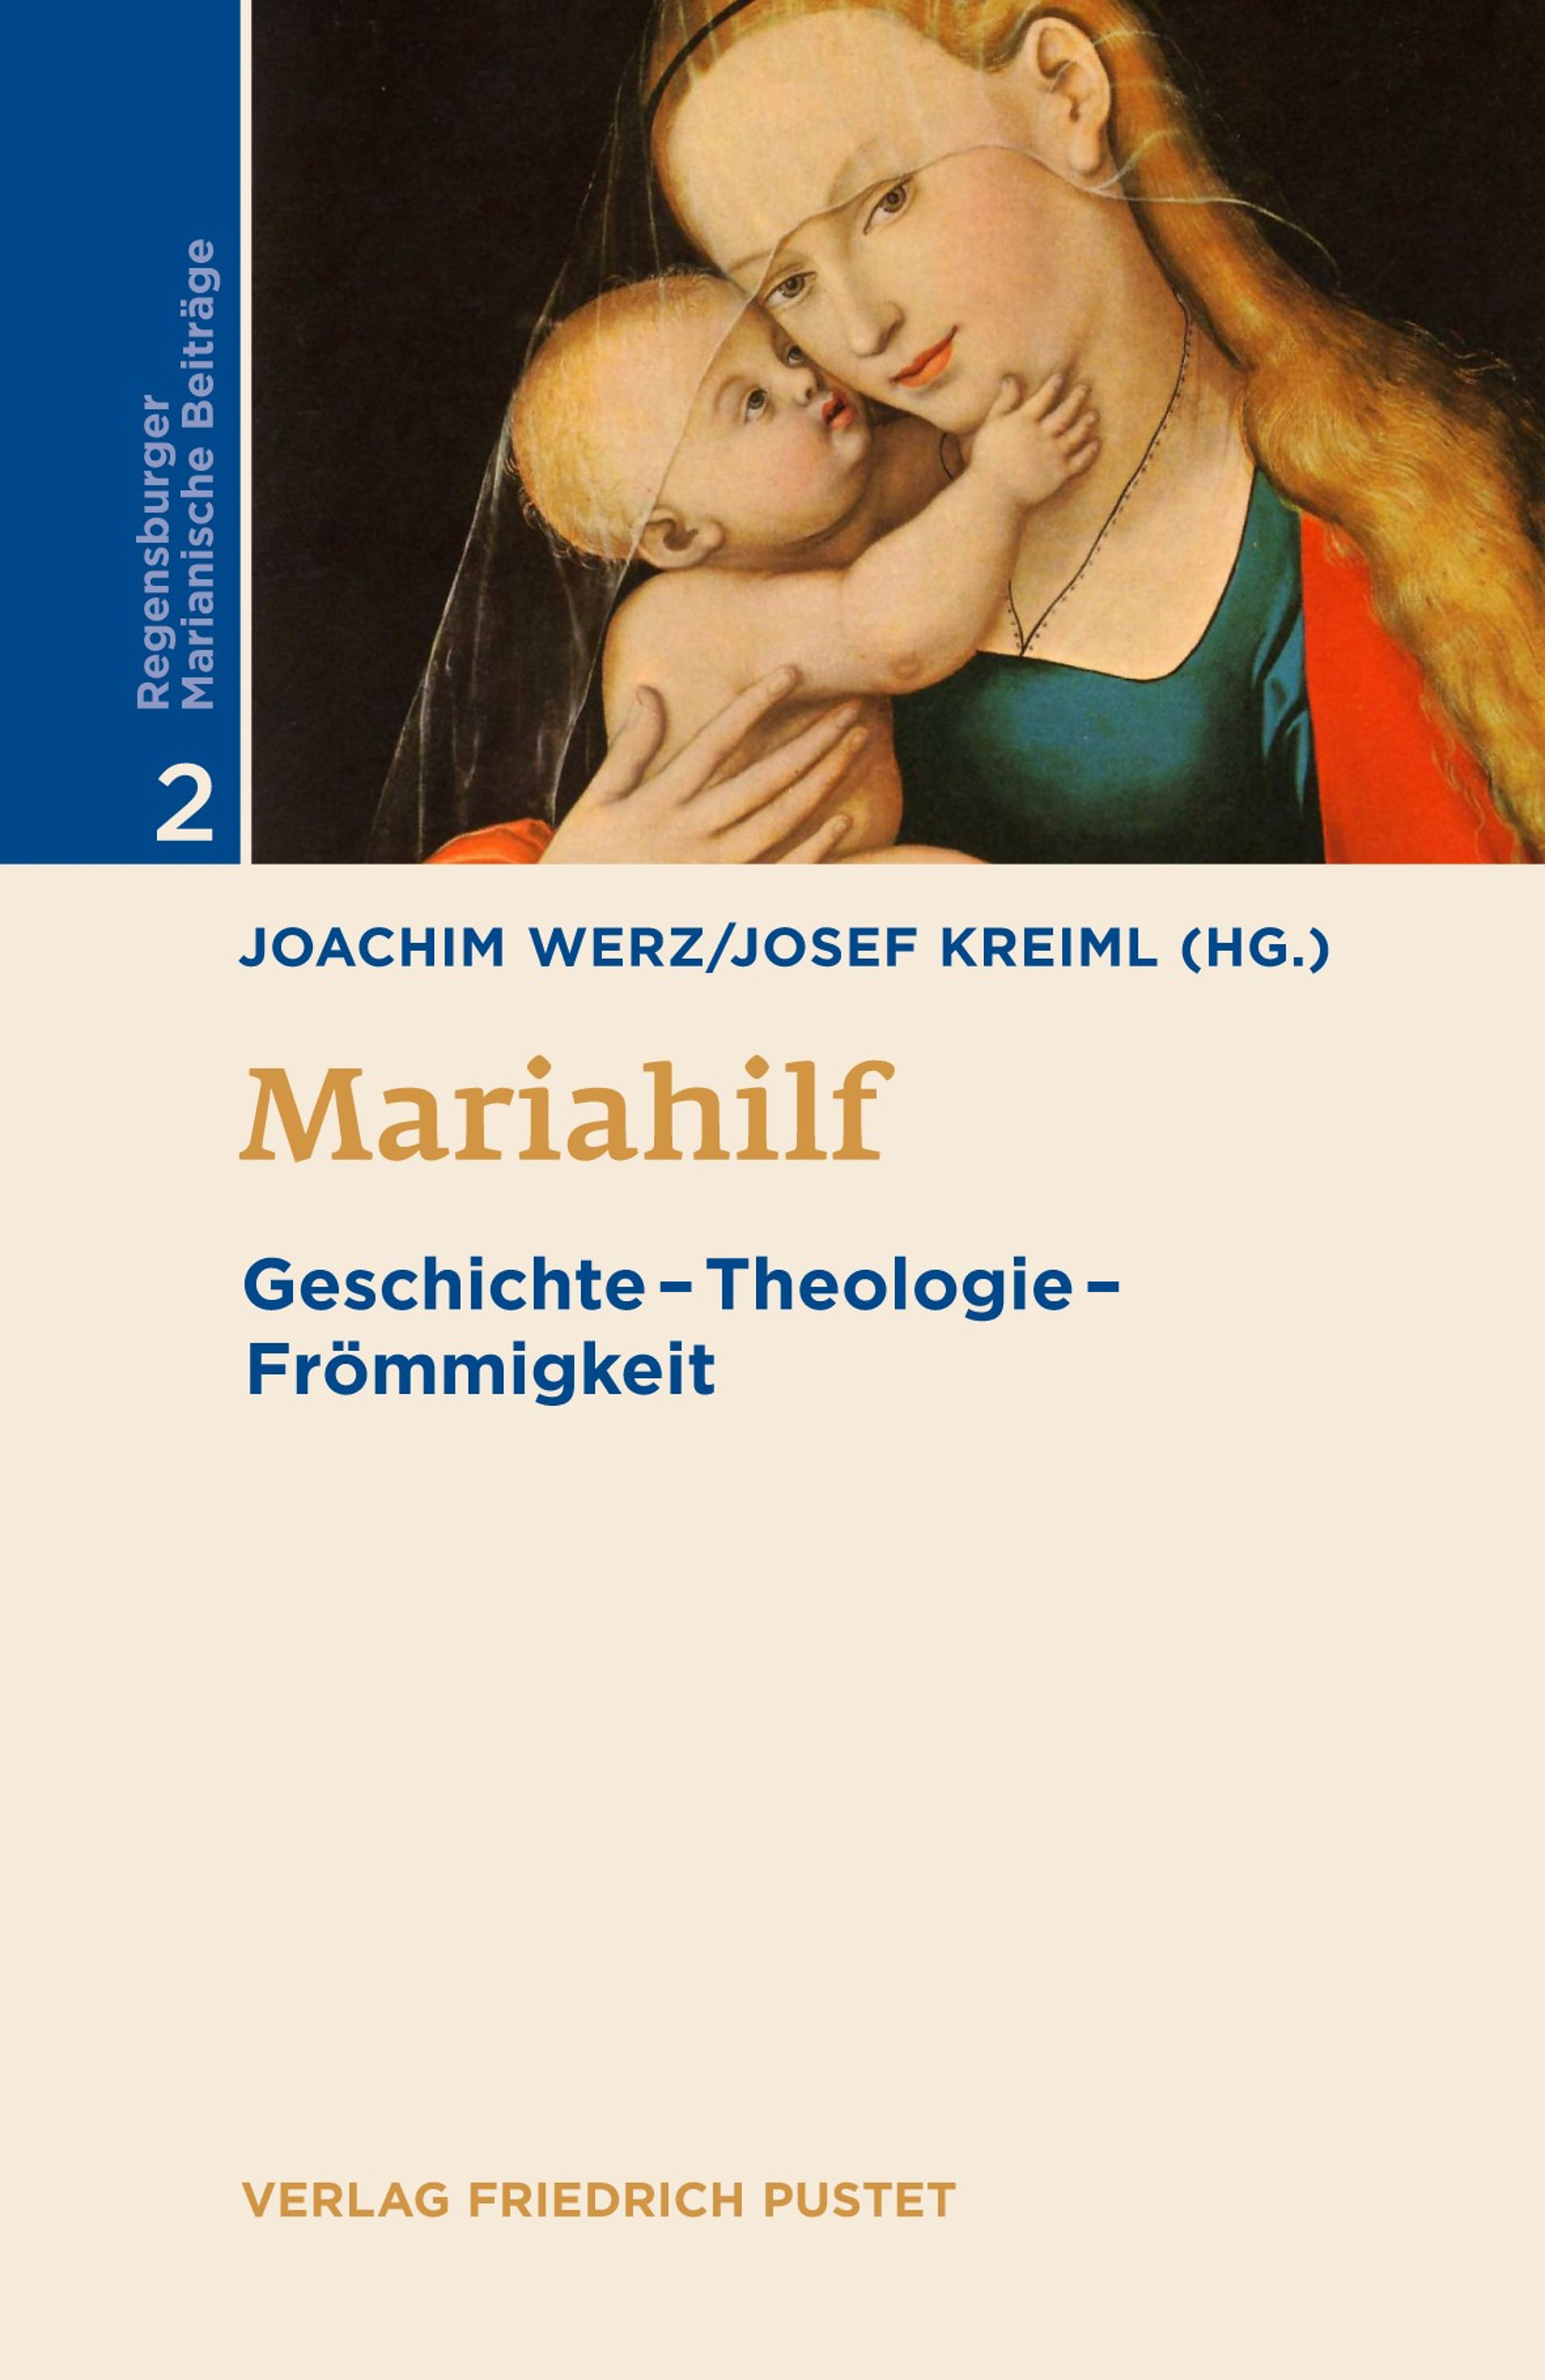 Werz Joachim, Kreiml Josef - Mariahilf